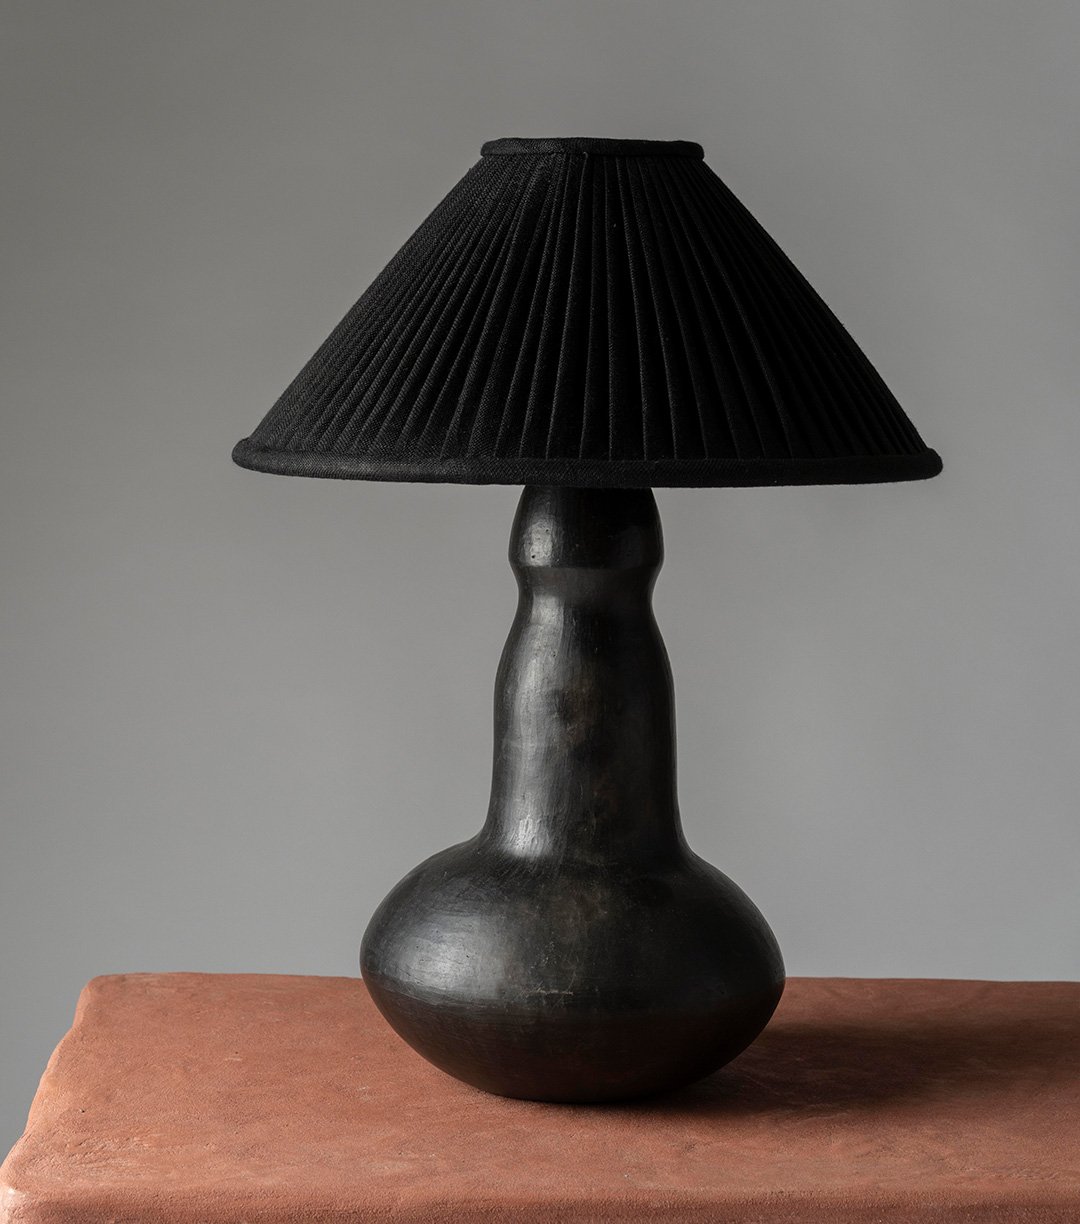 Longpi Tara Lamp designed by the Ravi Vazirani Design Studio in Effect Magazine